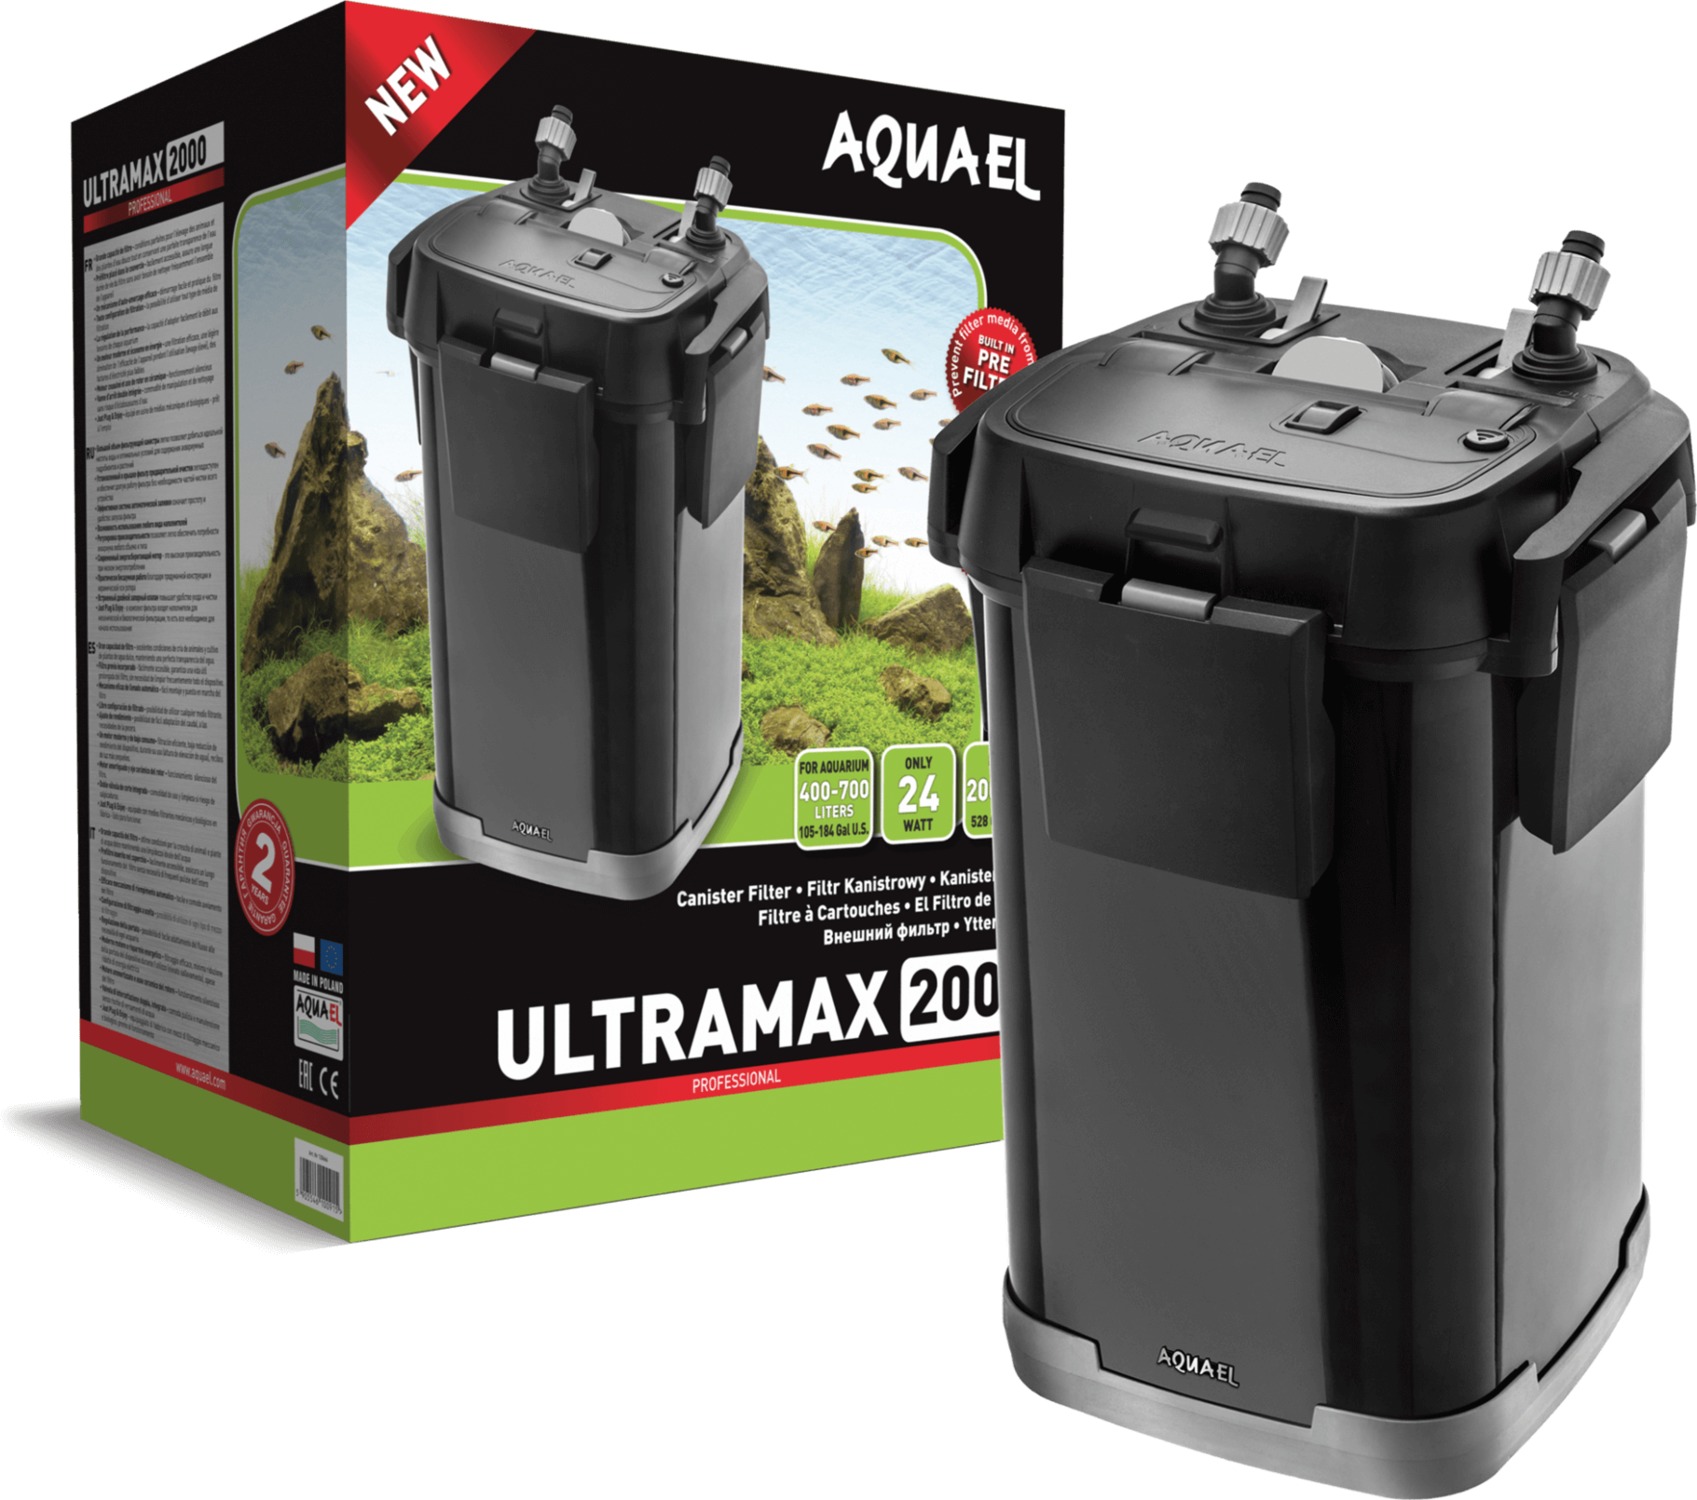 AquaEl Ultramax serie de filtre externe pentru acvariu - zoom